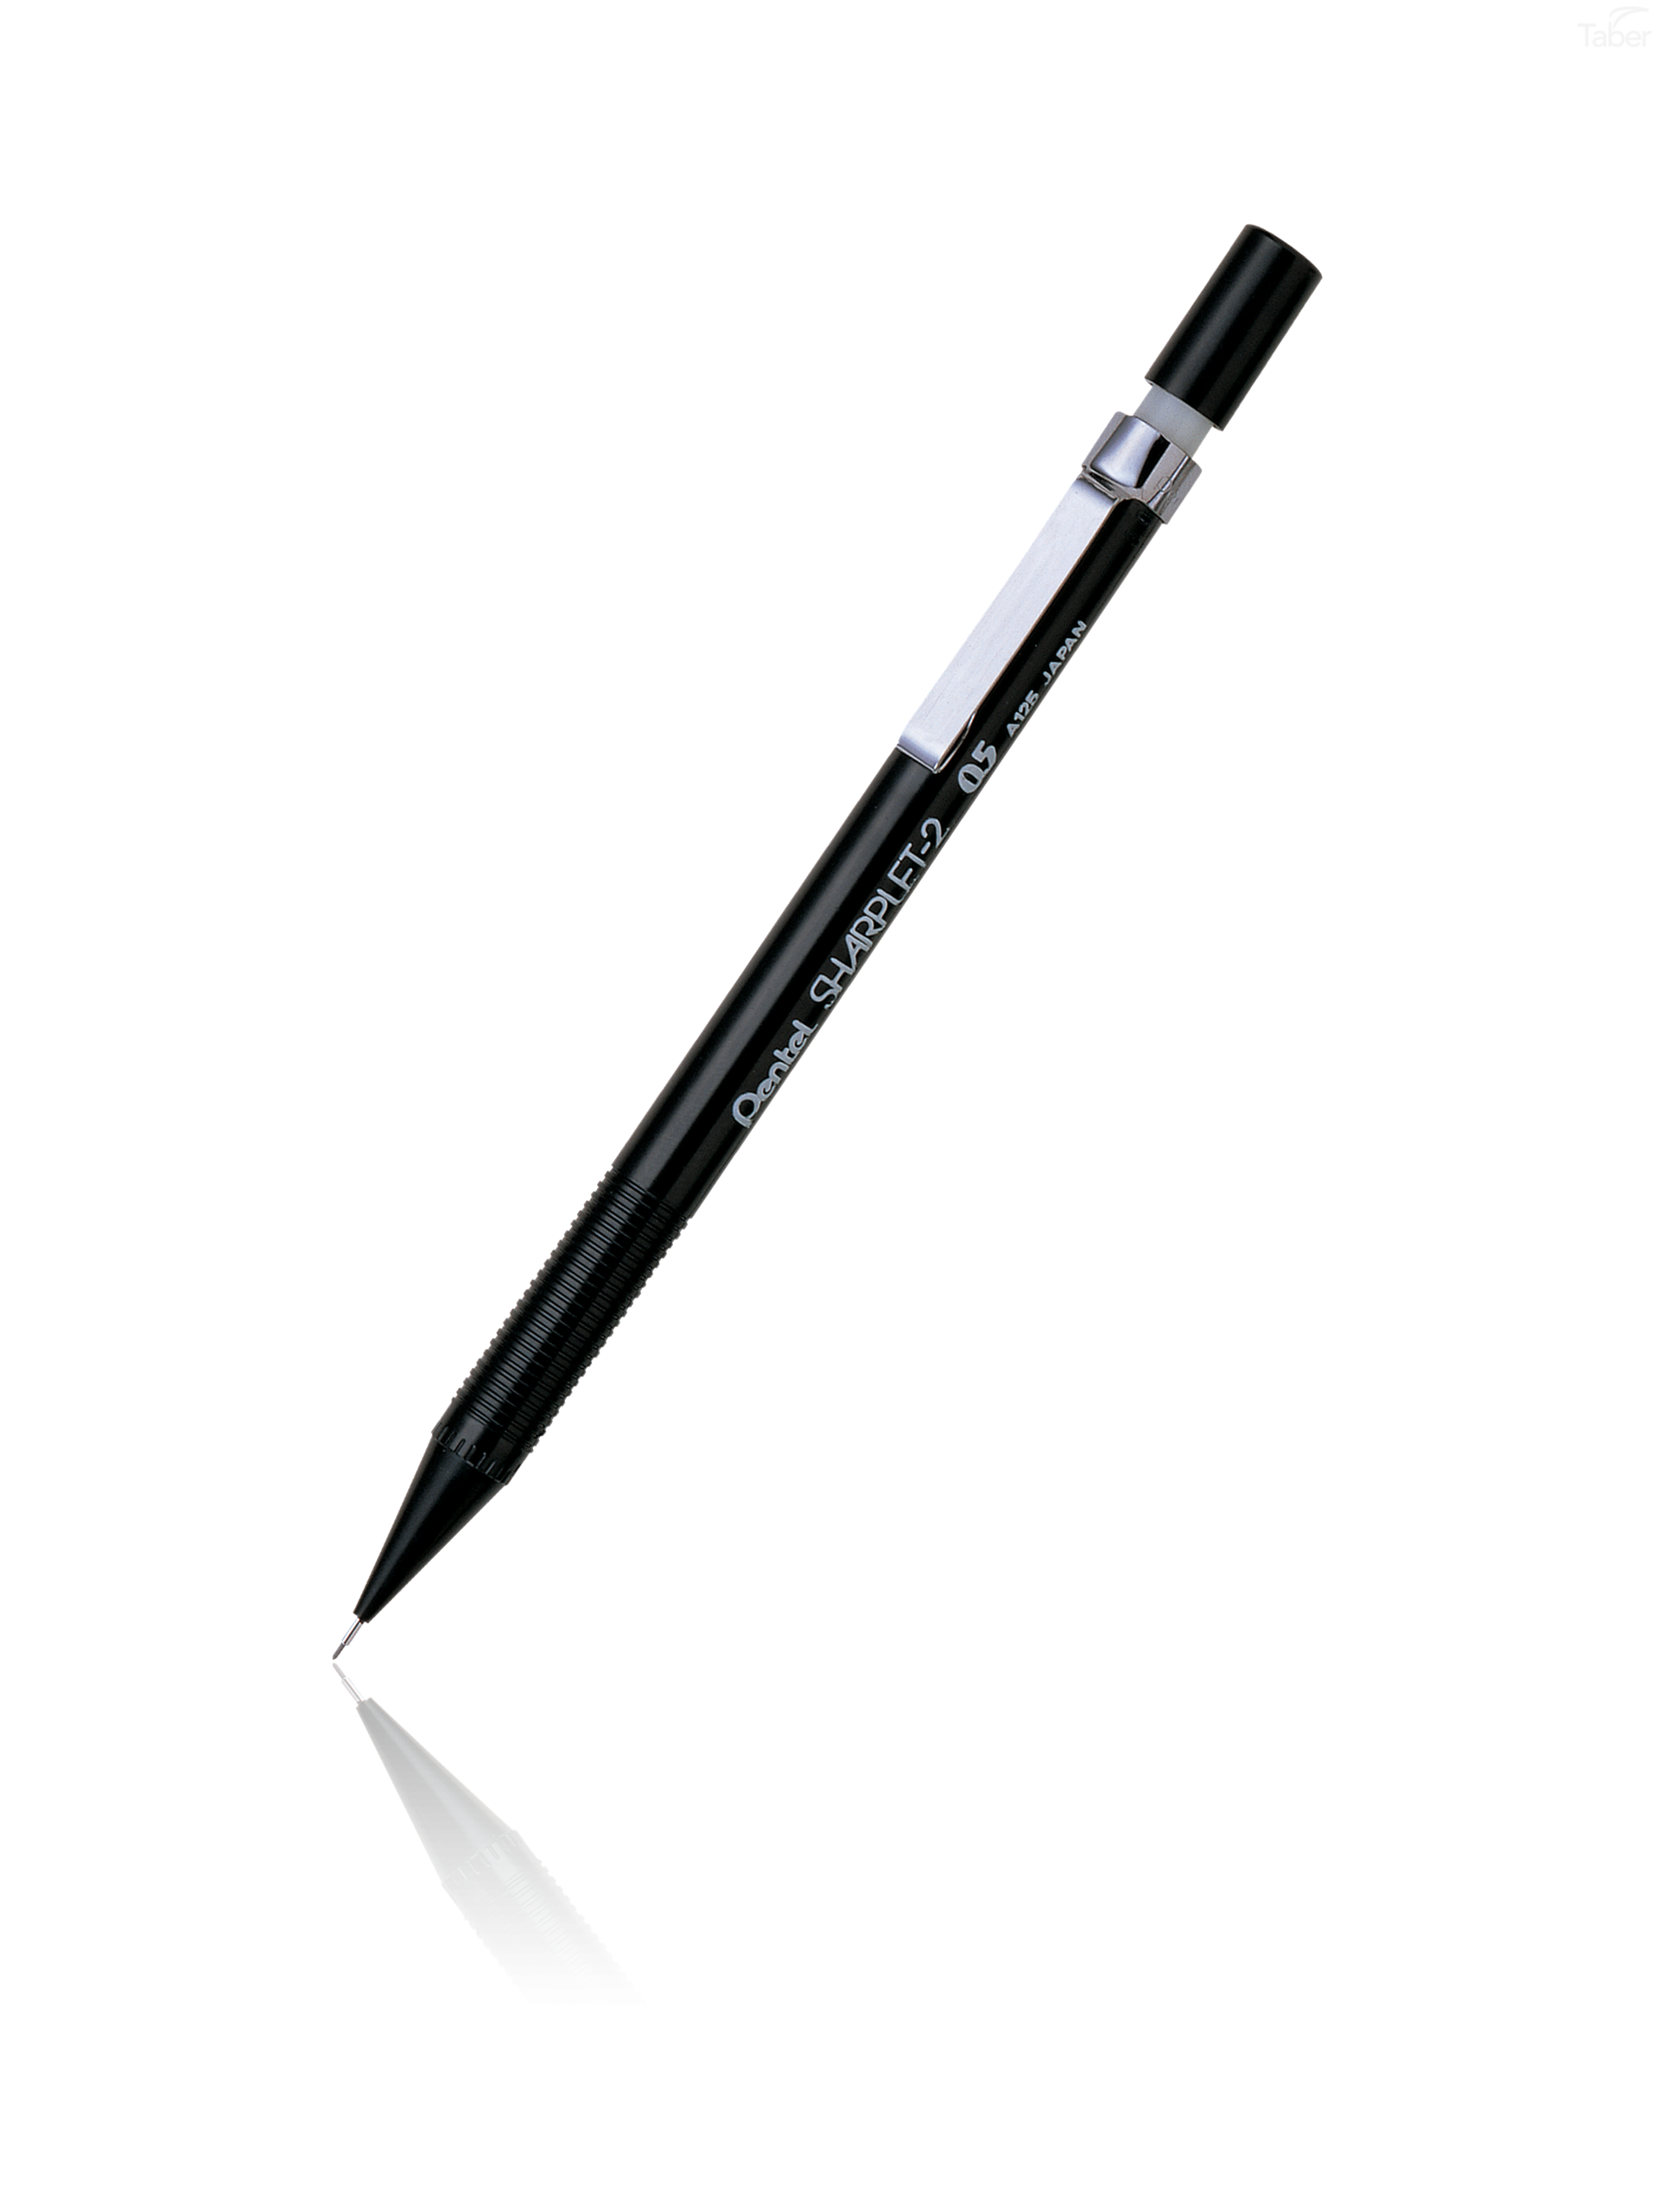 Pentel Sharplet-2 Mechanical Pencil, Mat Black Barrel, 0.5mm